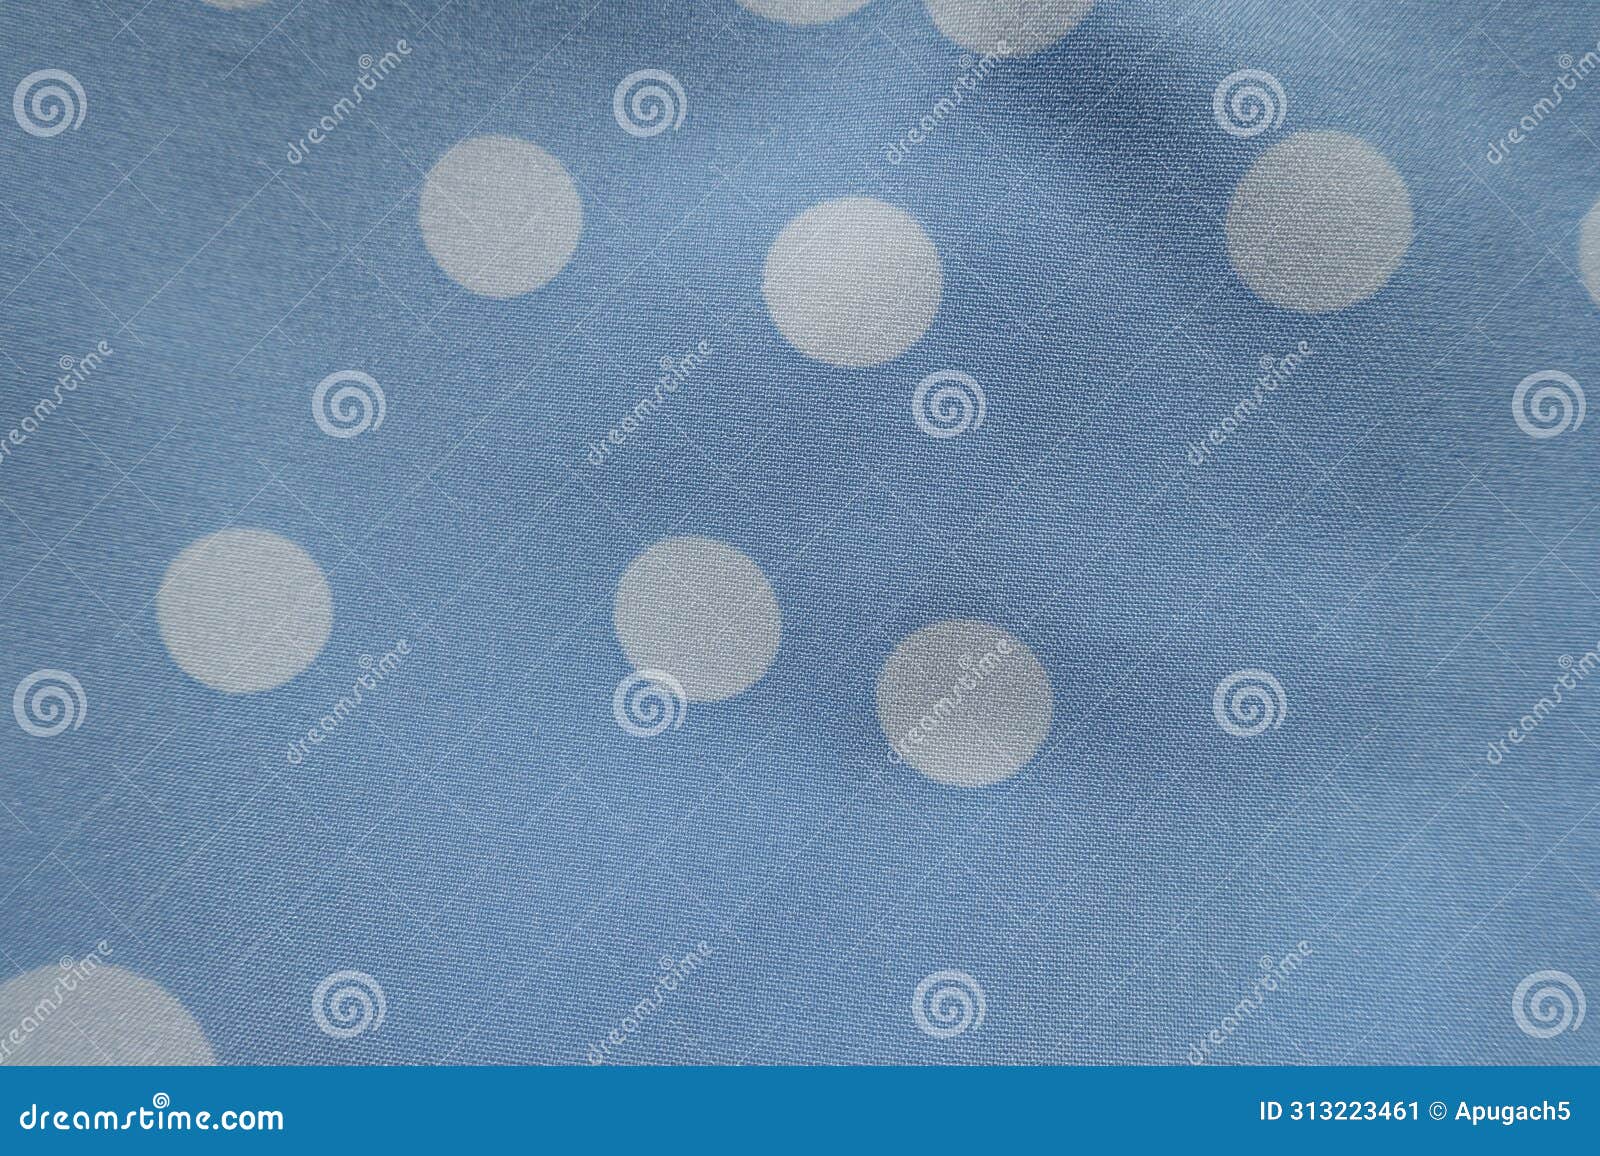 macro of light blue rayon with polka dot pattern